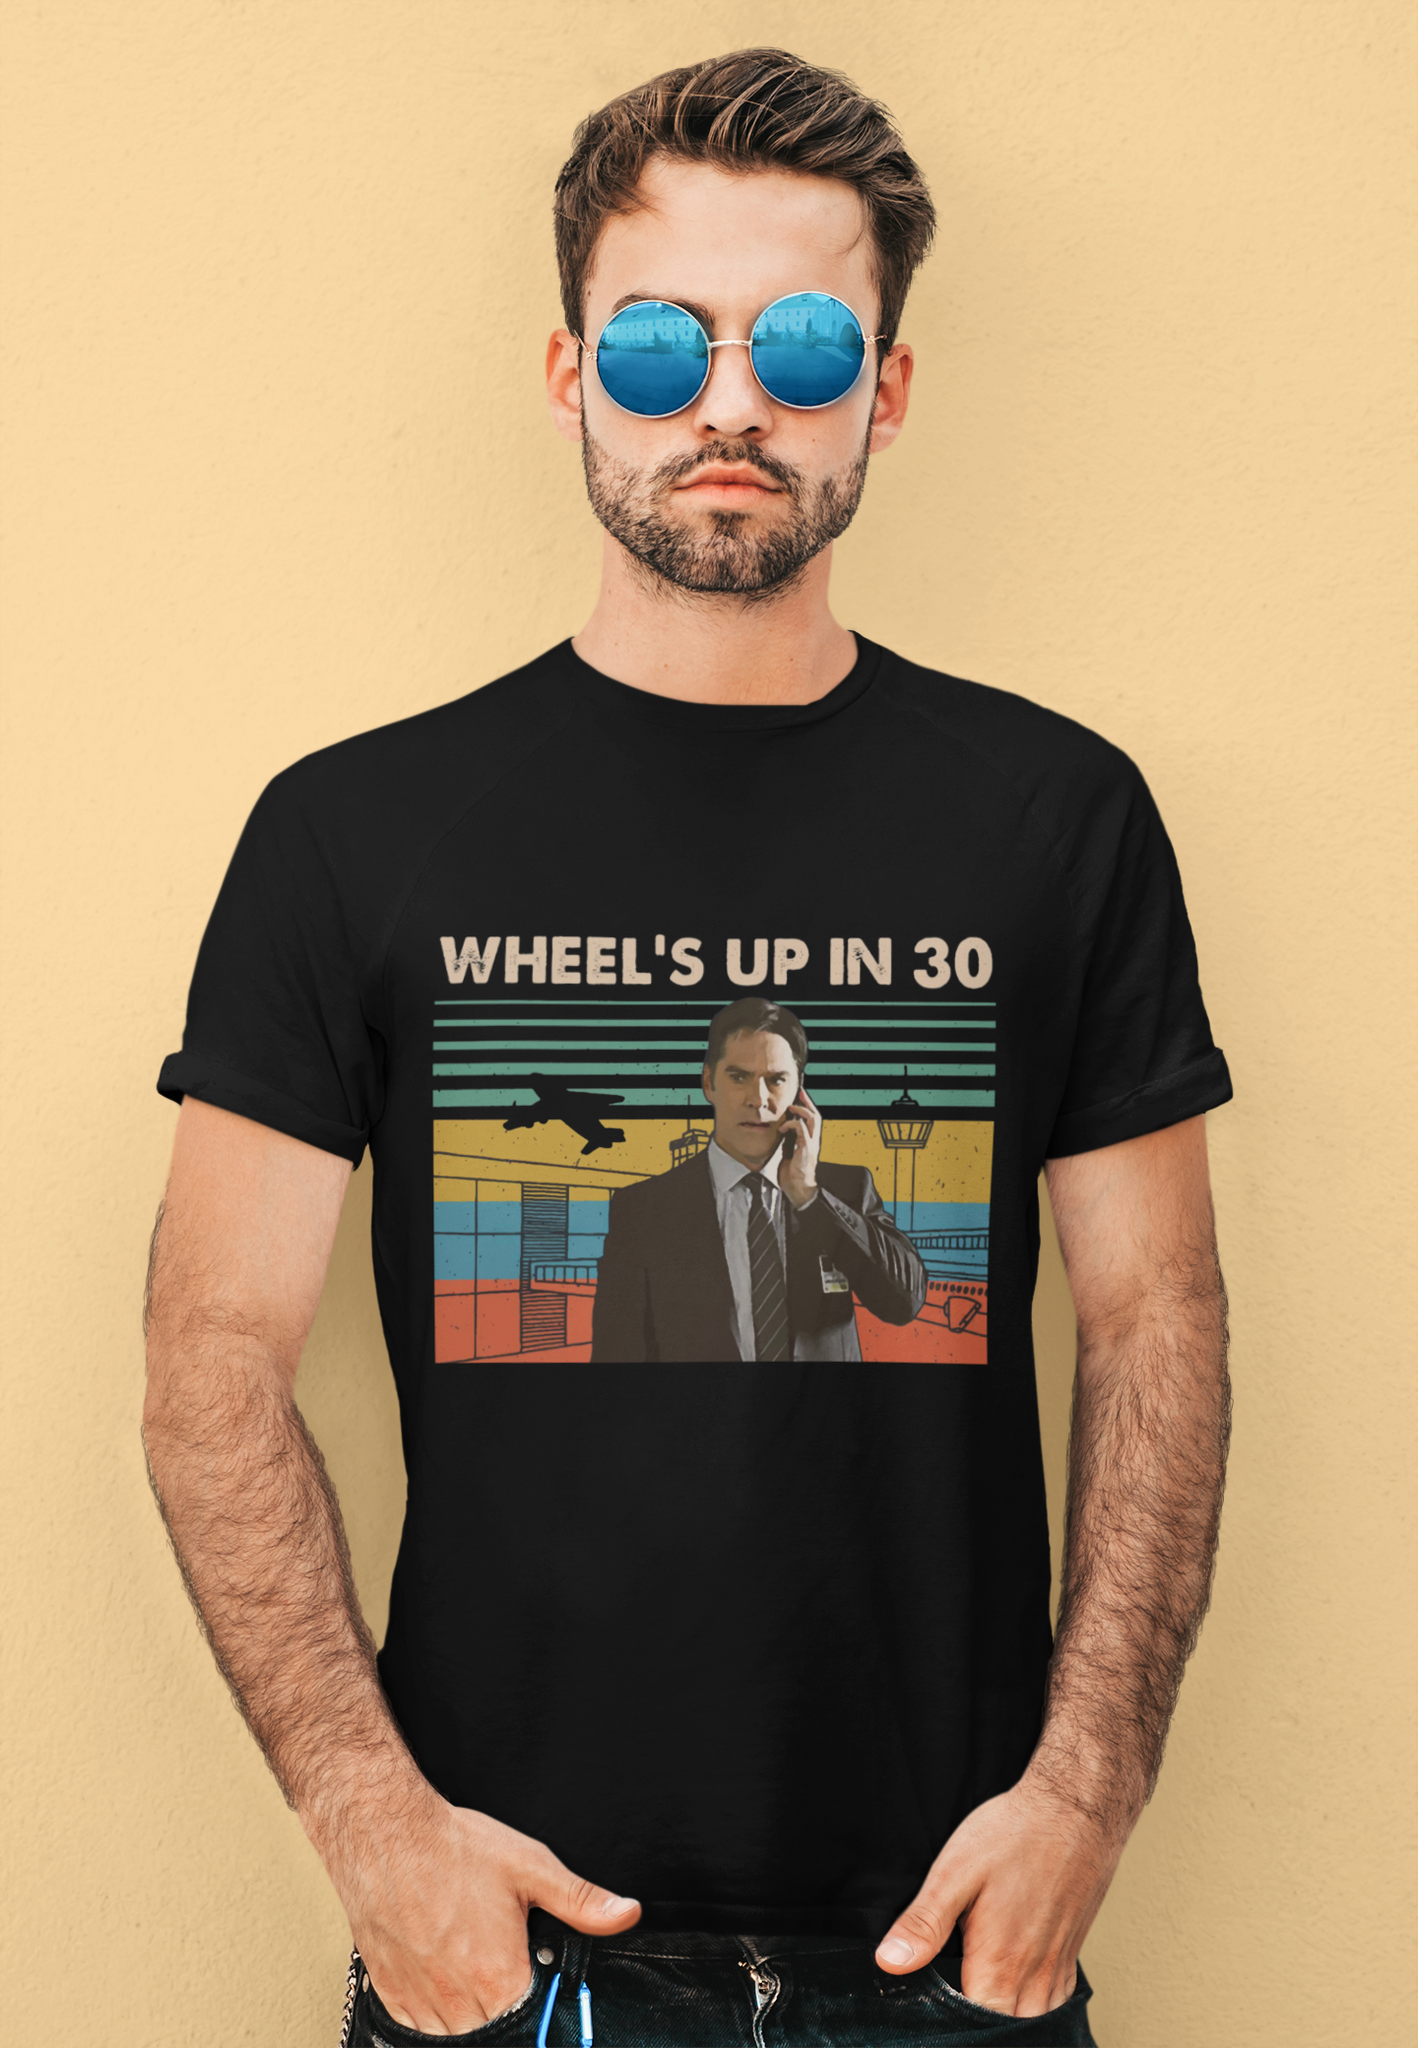 Criminal Minds Series T Shirt, Aaron Hotchner T Shirt, Wheels Up In 30 Tshirt